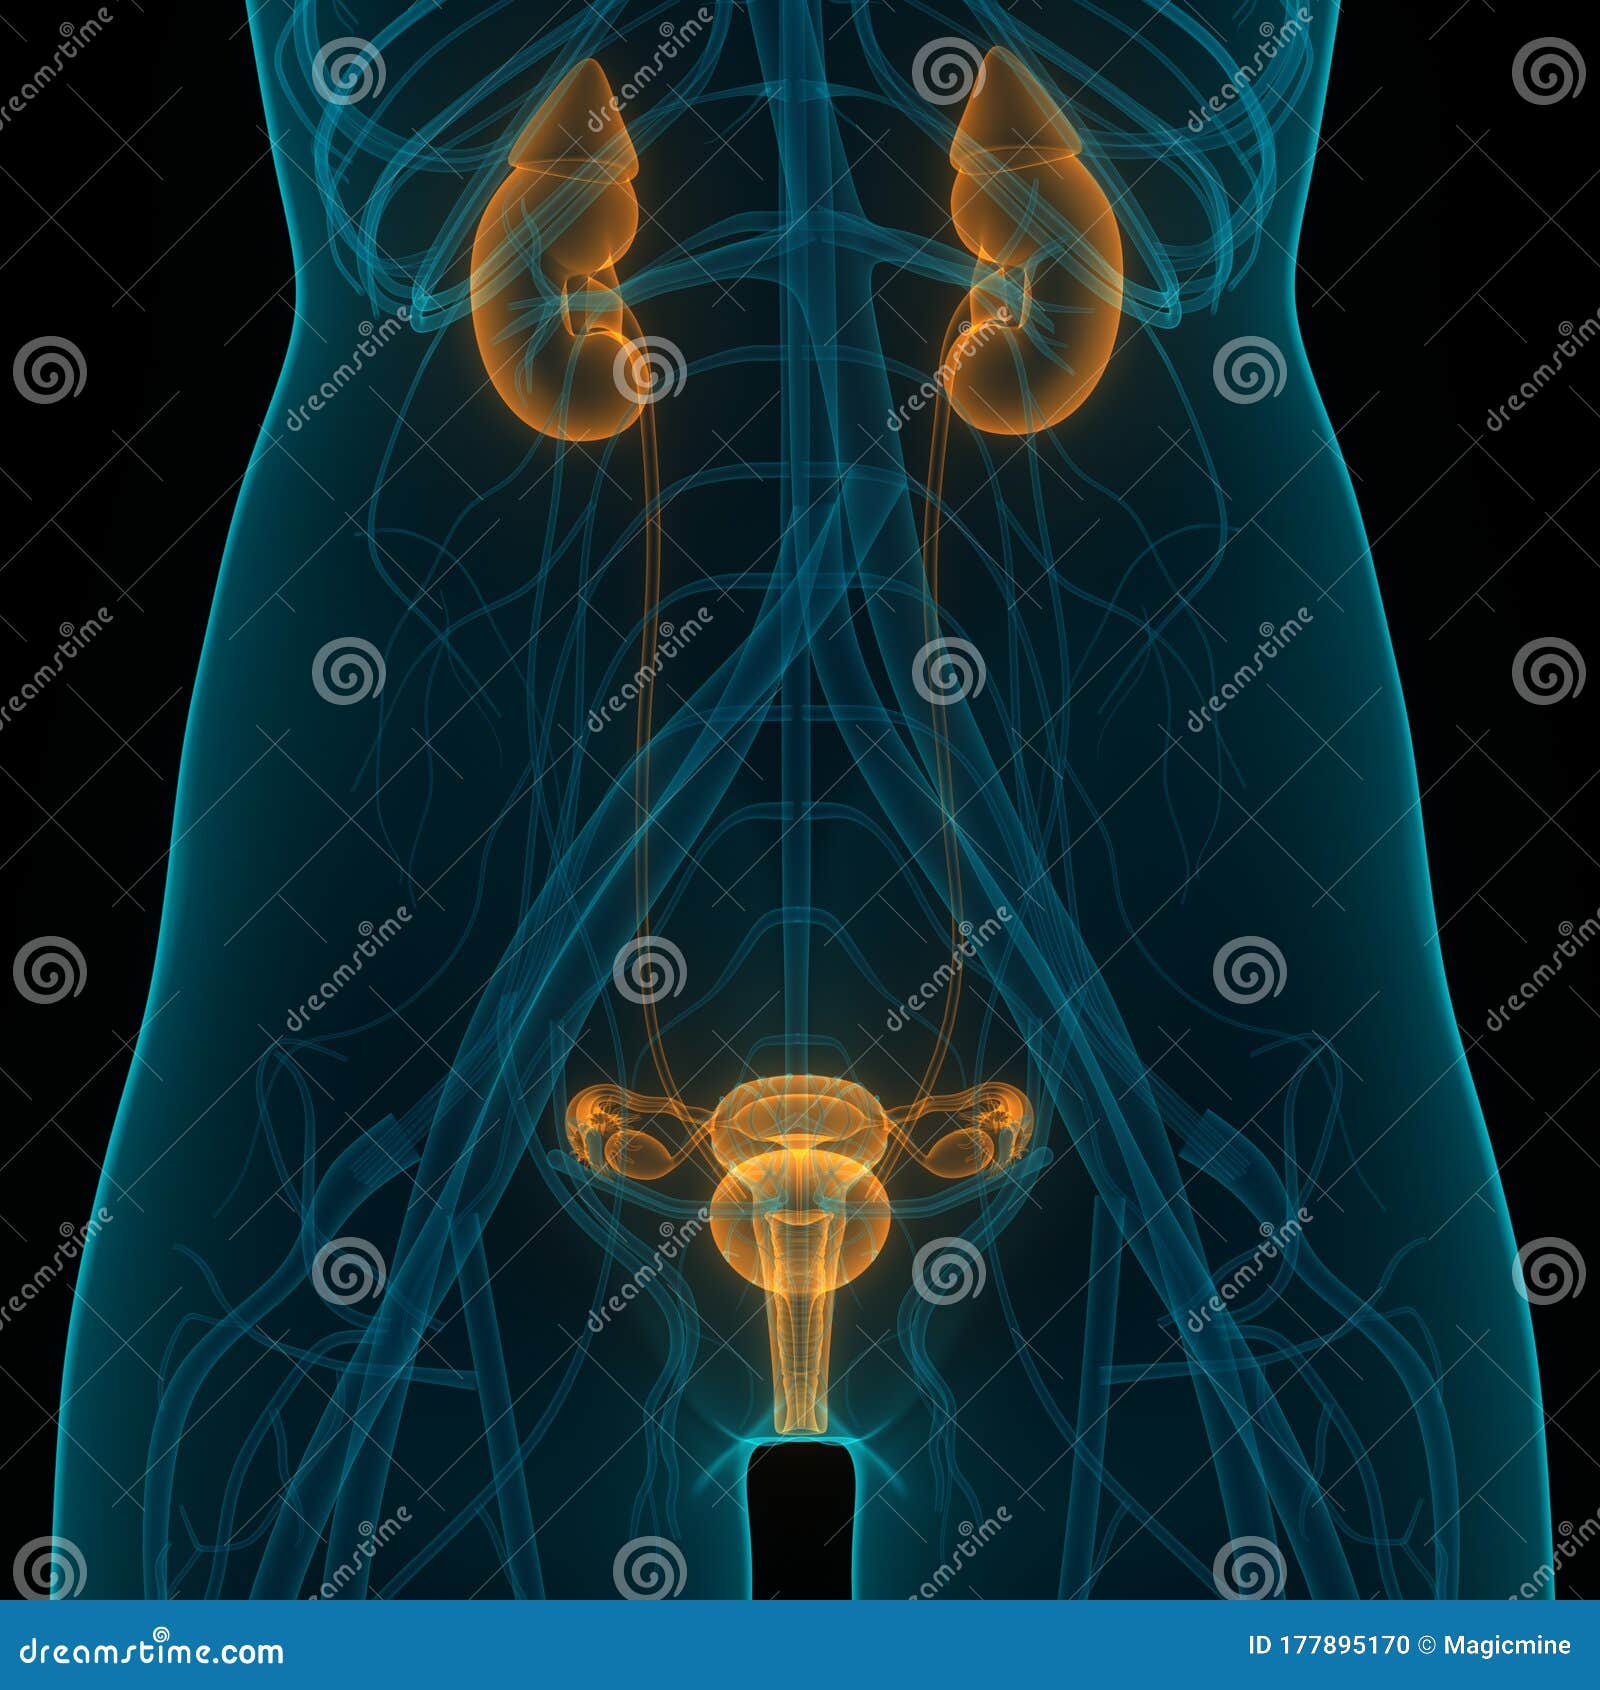 Anatomy Of Internal Organs Female - Female Reproductive System, Healthy Internal Organs, Human ...